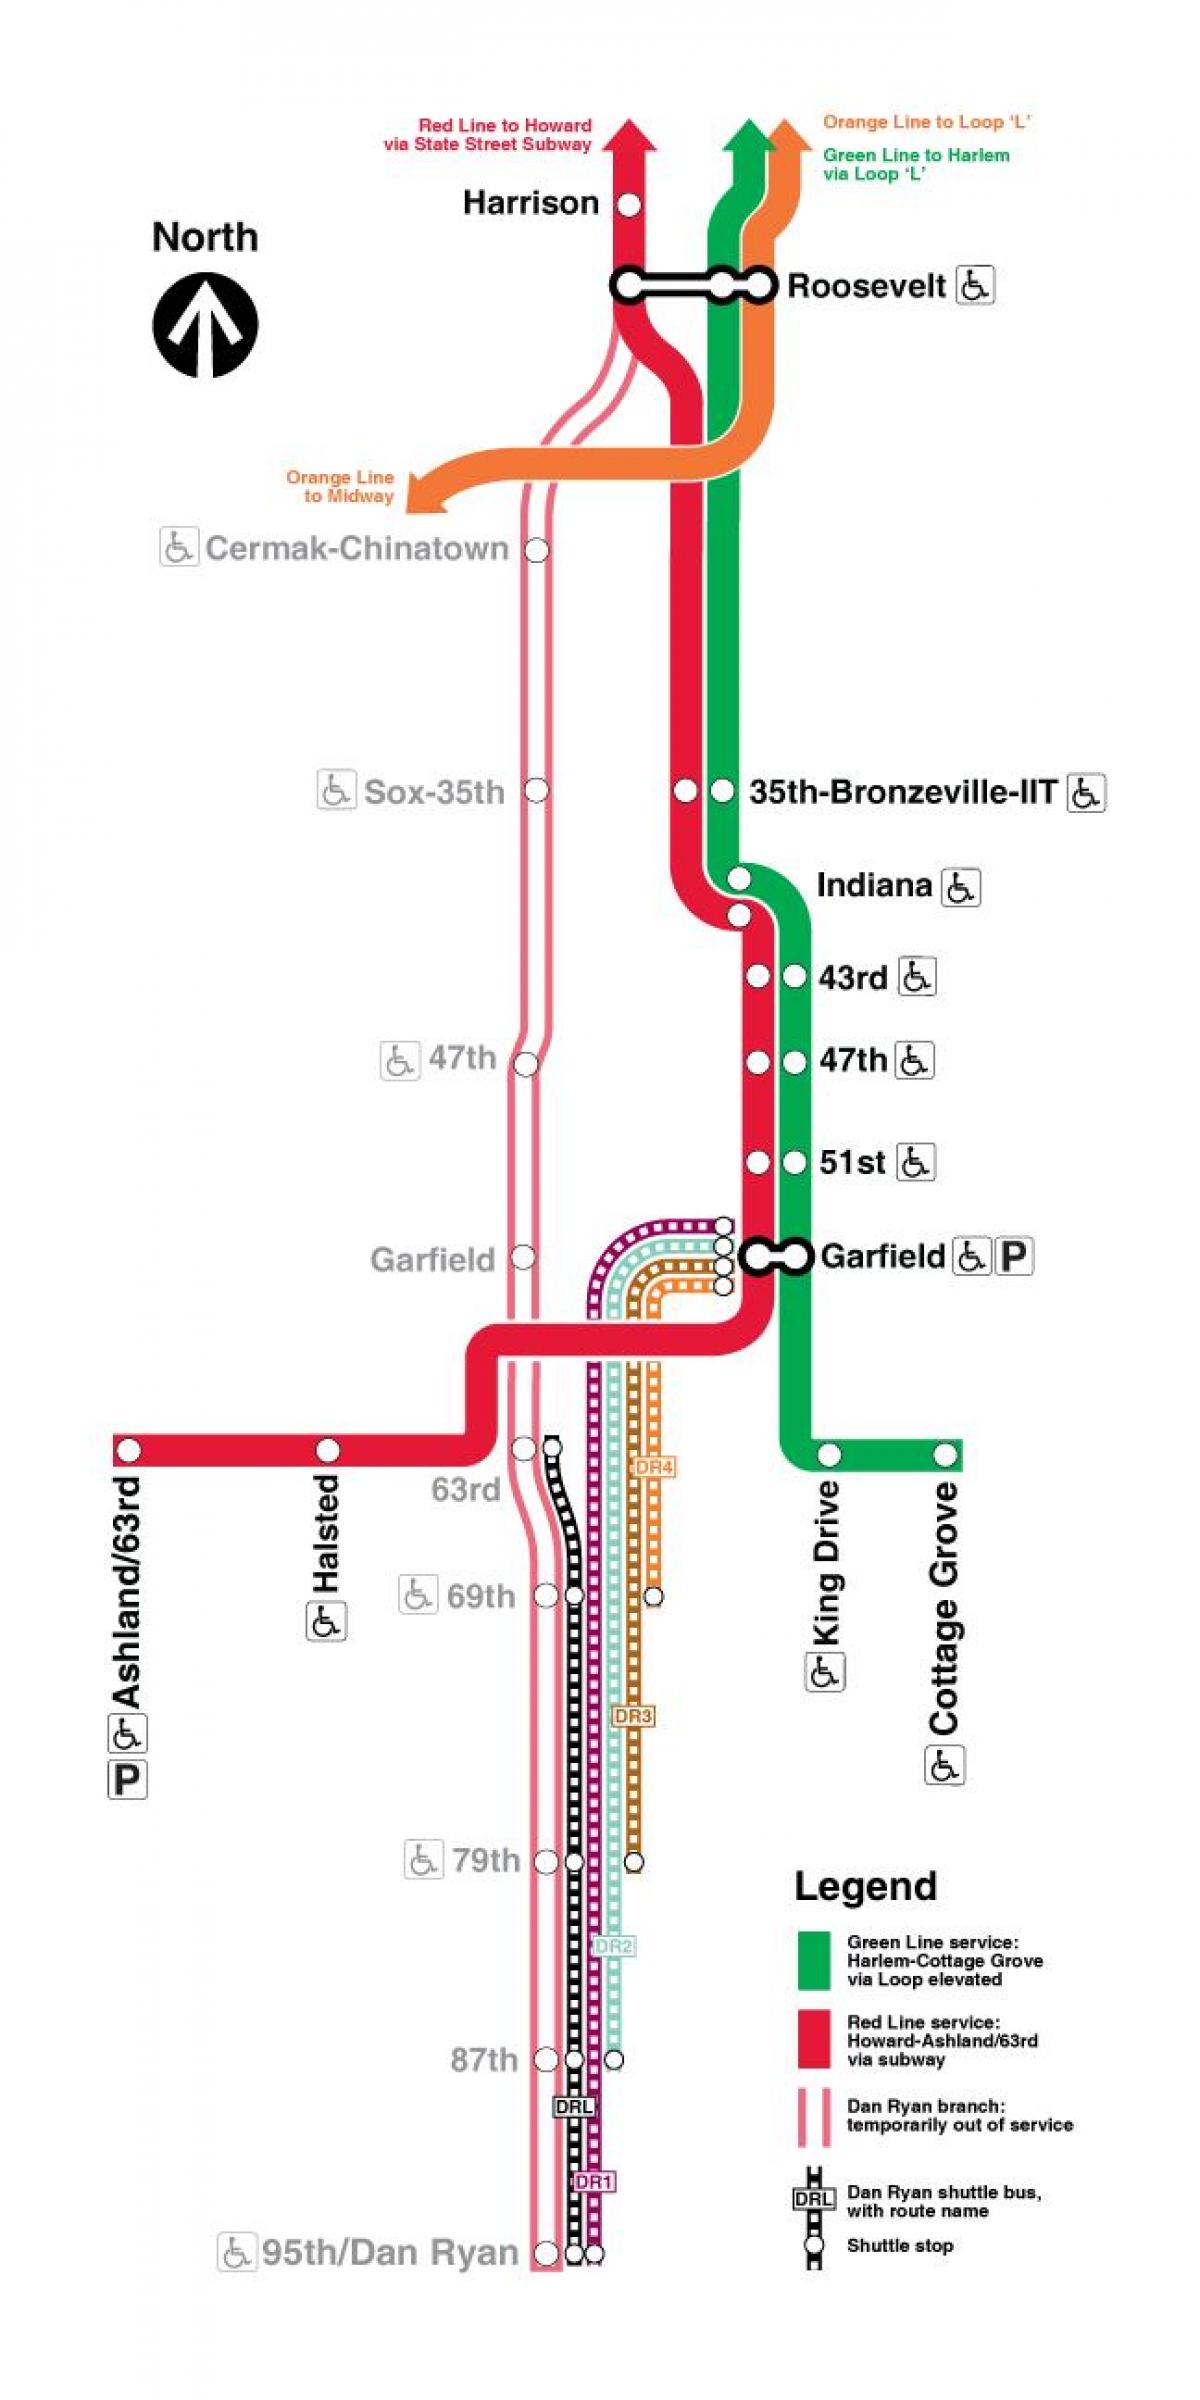 Chicago peta kereta api garis merah